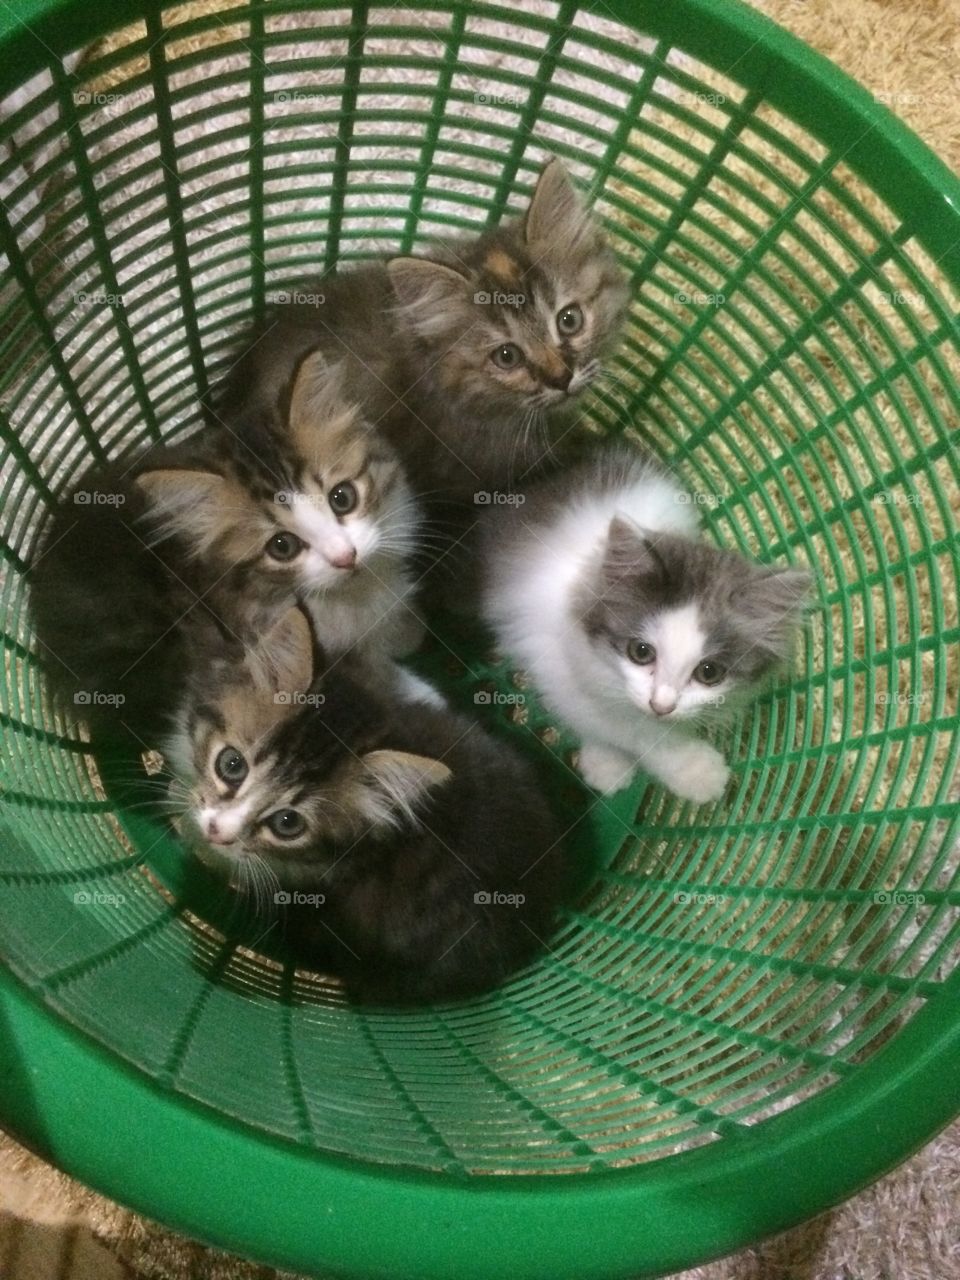 Kitty in the bucket